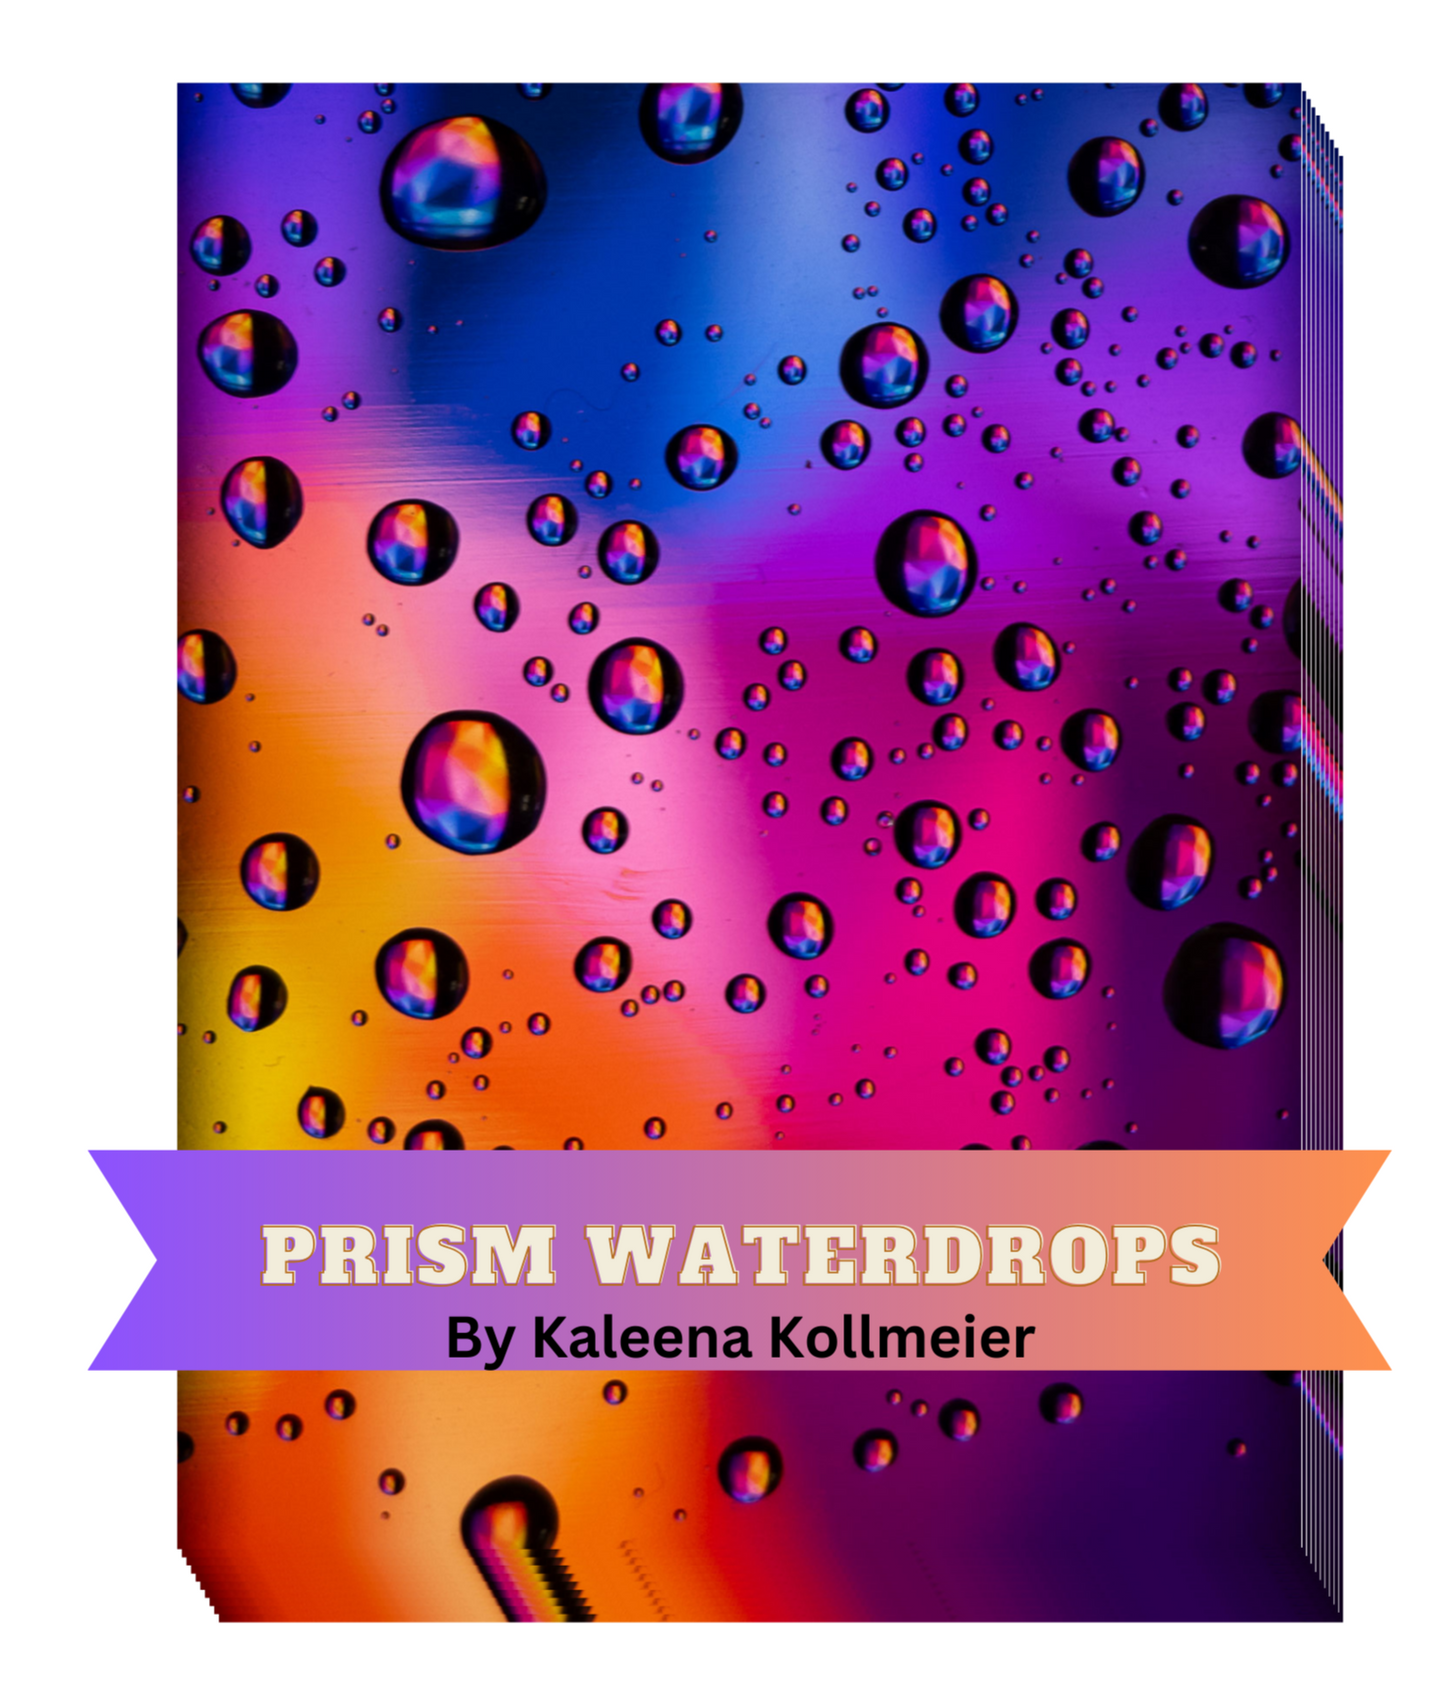 "Prism Waterdrops" by Kaleena Kollmeier Decorative Diamond Painting Release Papers